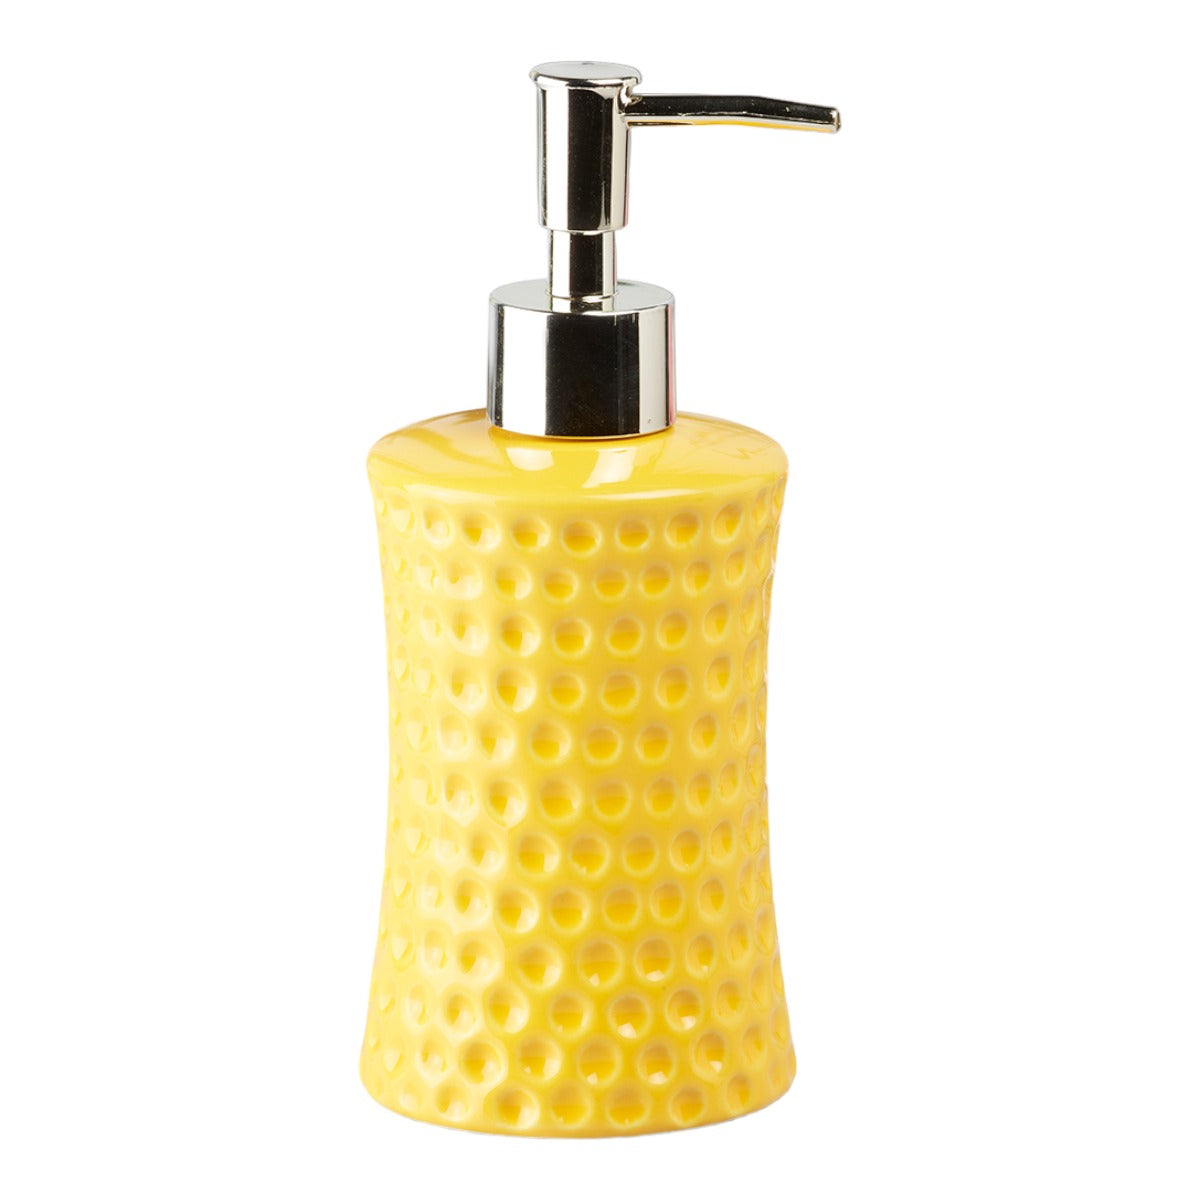 Ceramic Soap Dispenser Pump for Bathroom for Bath Gel, Lotion, Shampoo (8039)